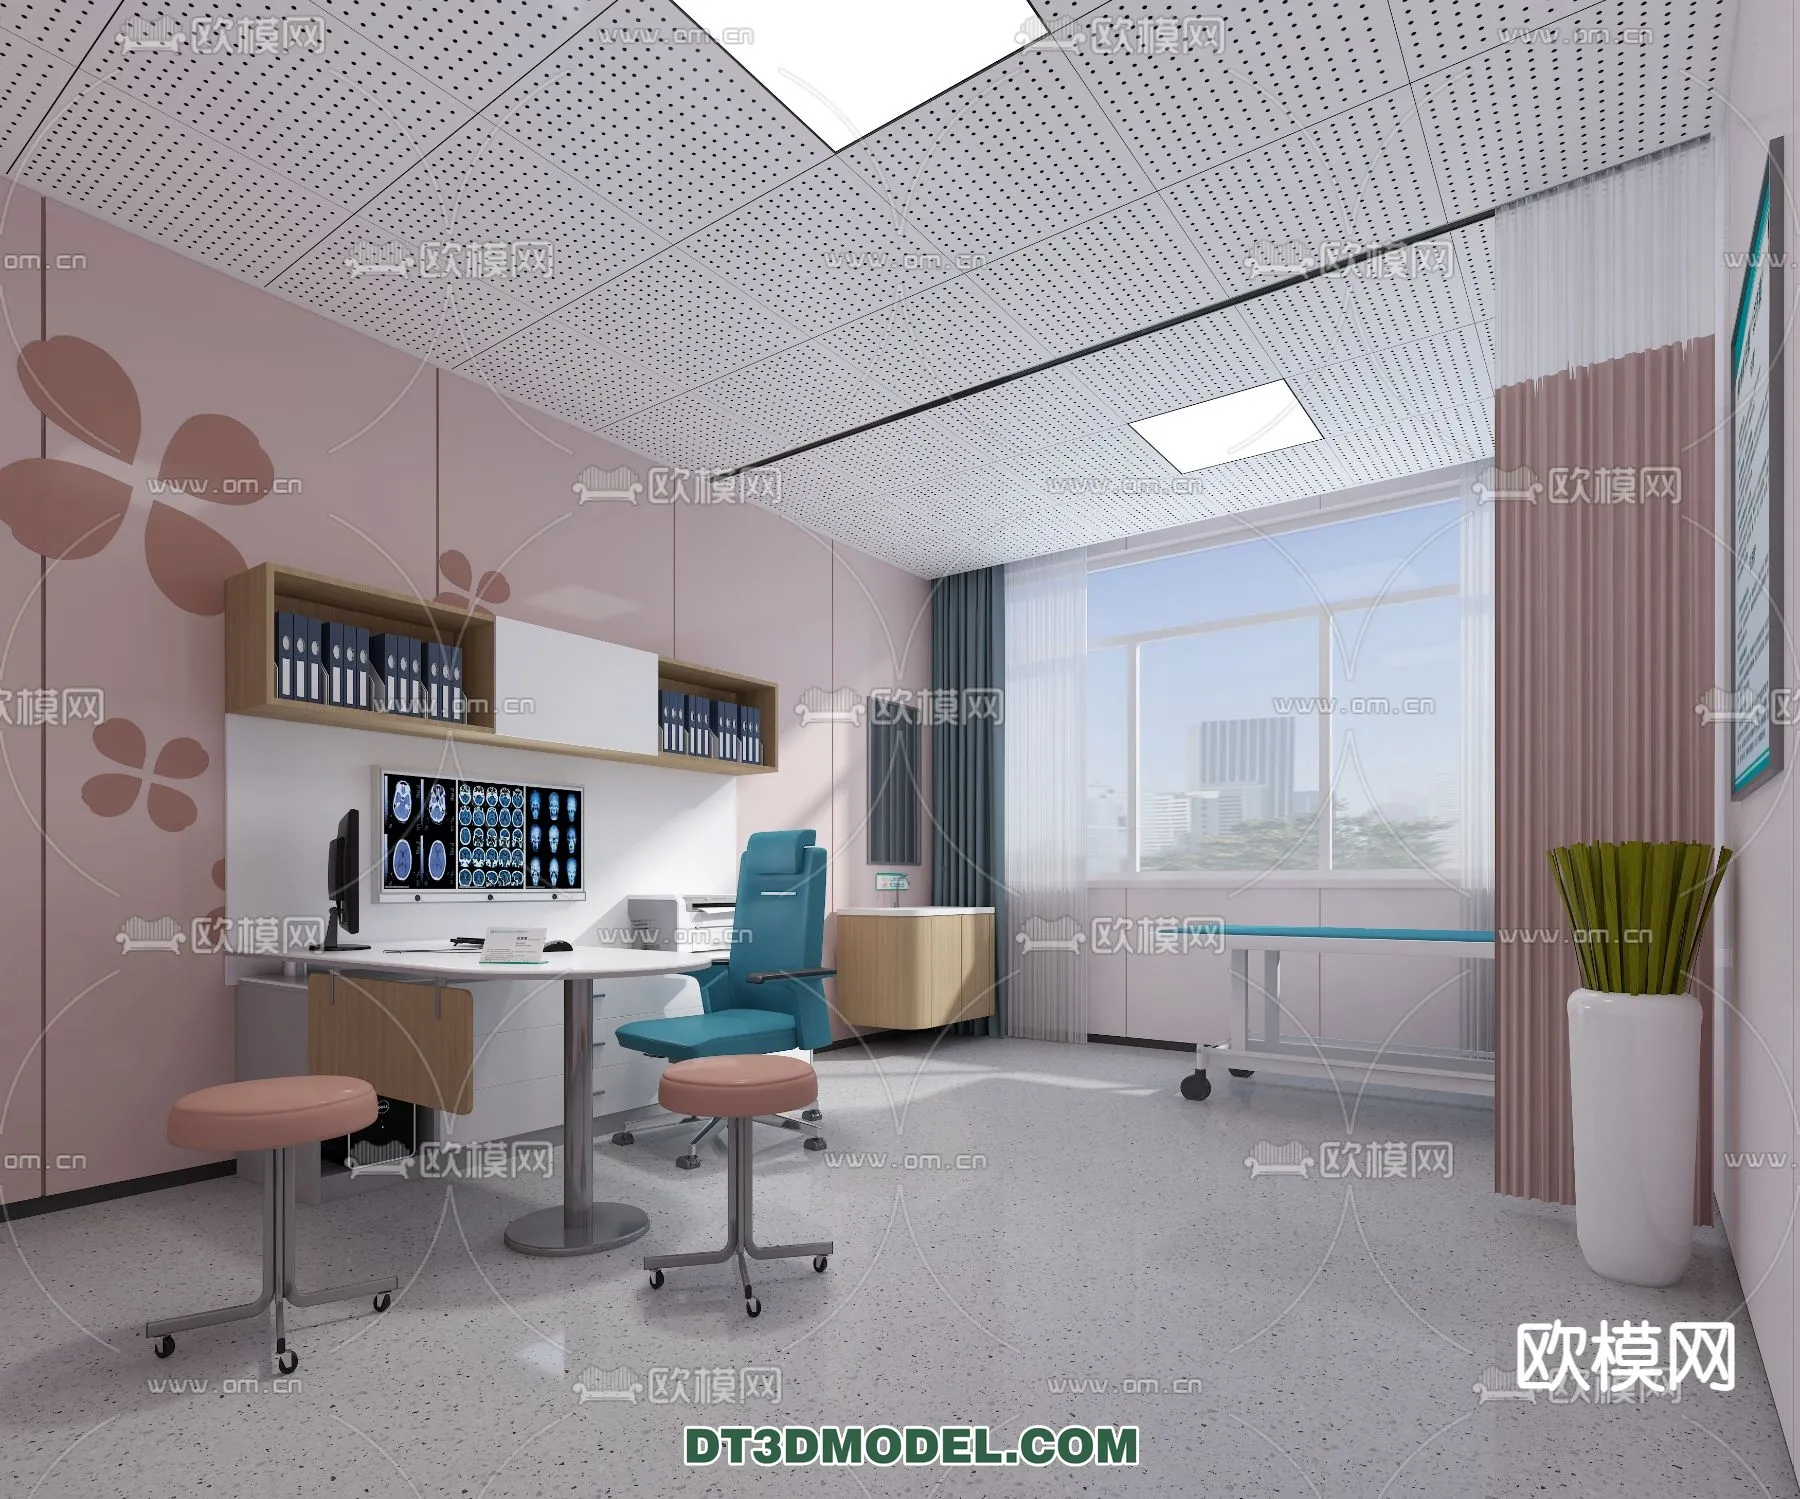 HOSPITAL 3D SCENES – MODERN – 0054